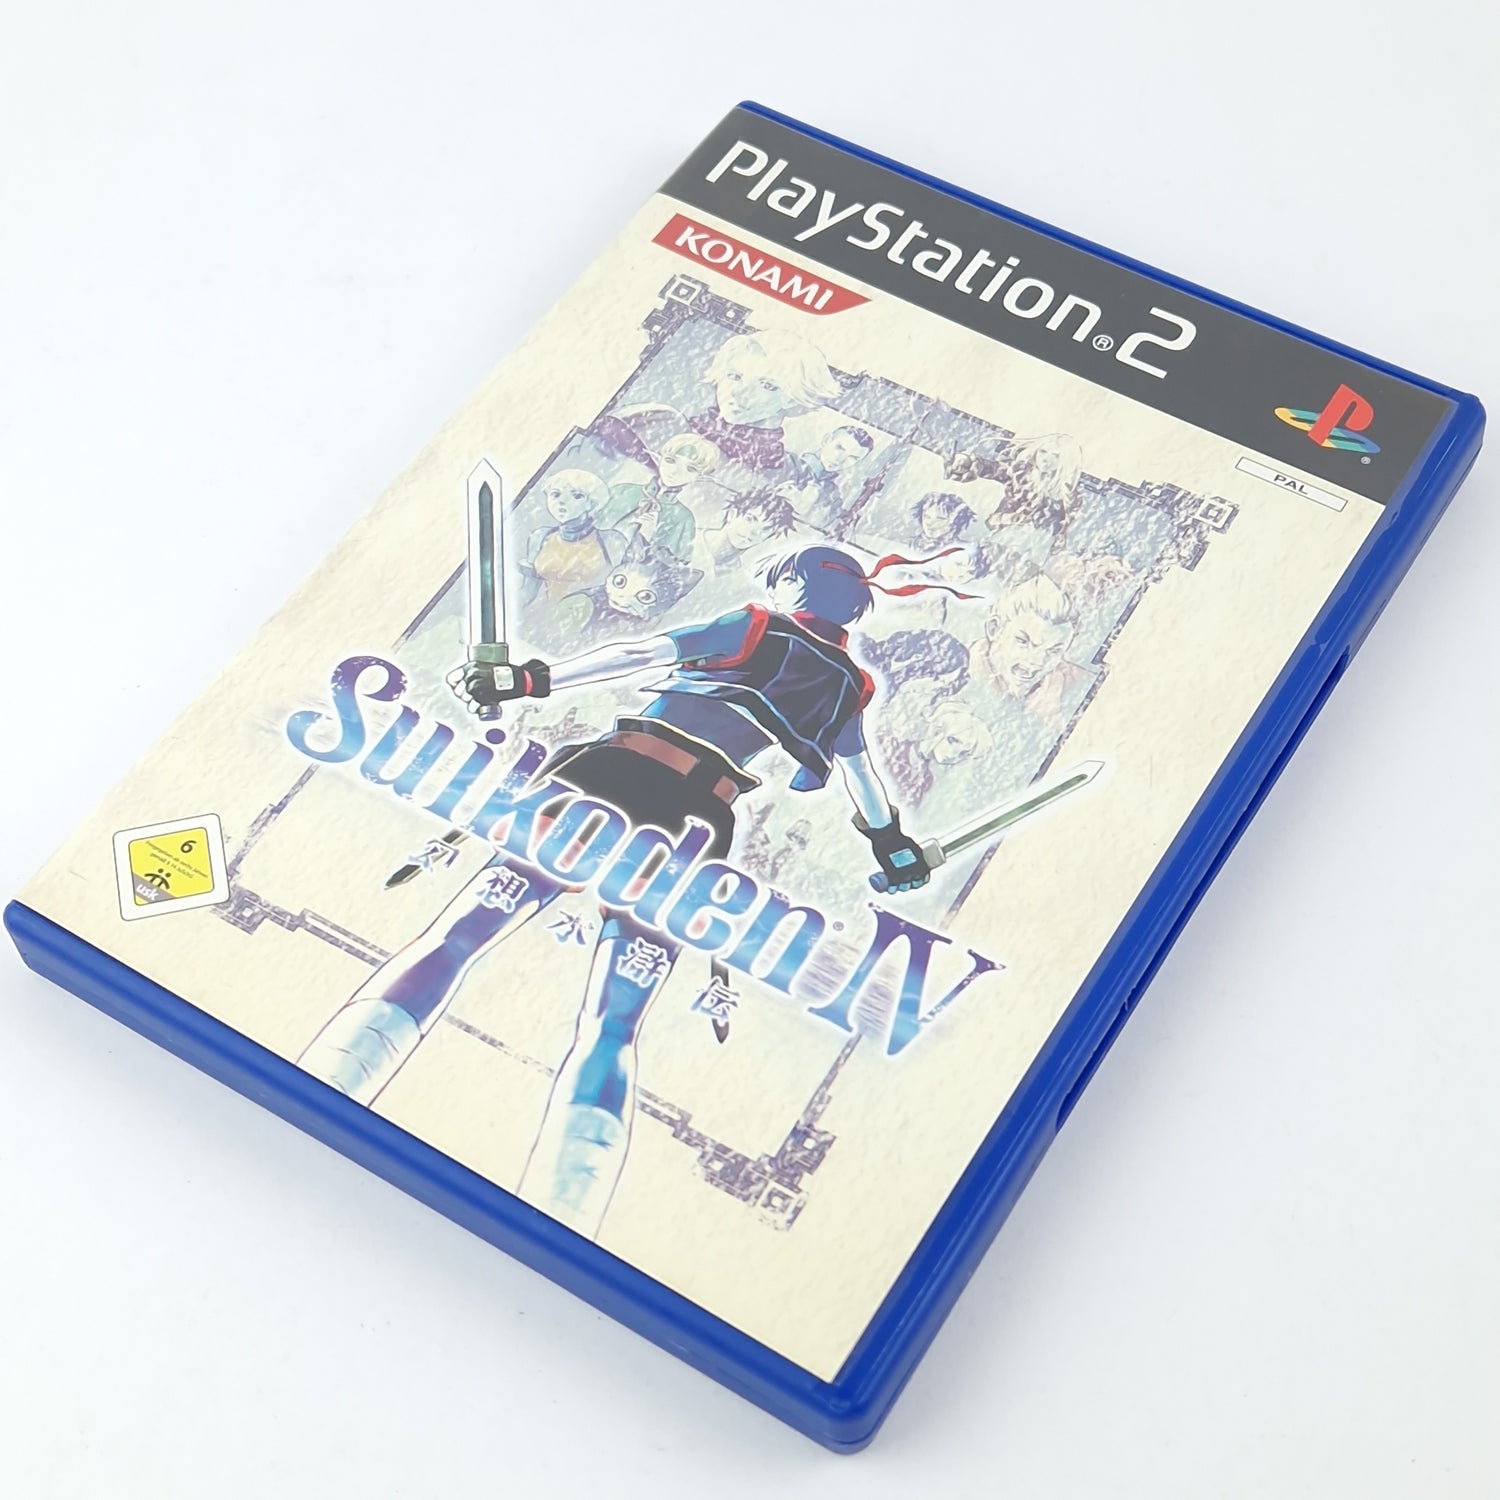 Playstation 2 game: Suikoden IV 4 - CD manual OVP / SONY PS2 Konami PAL